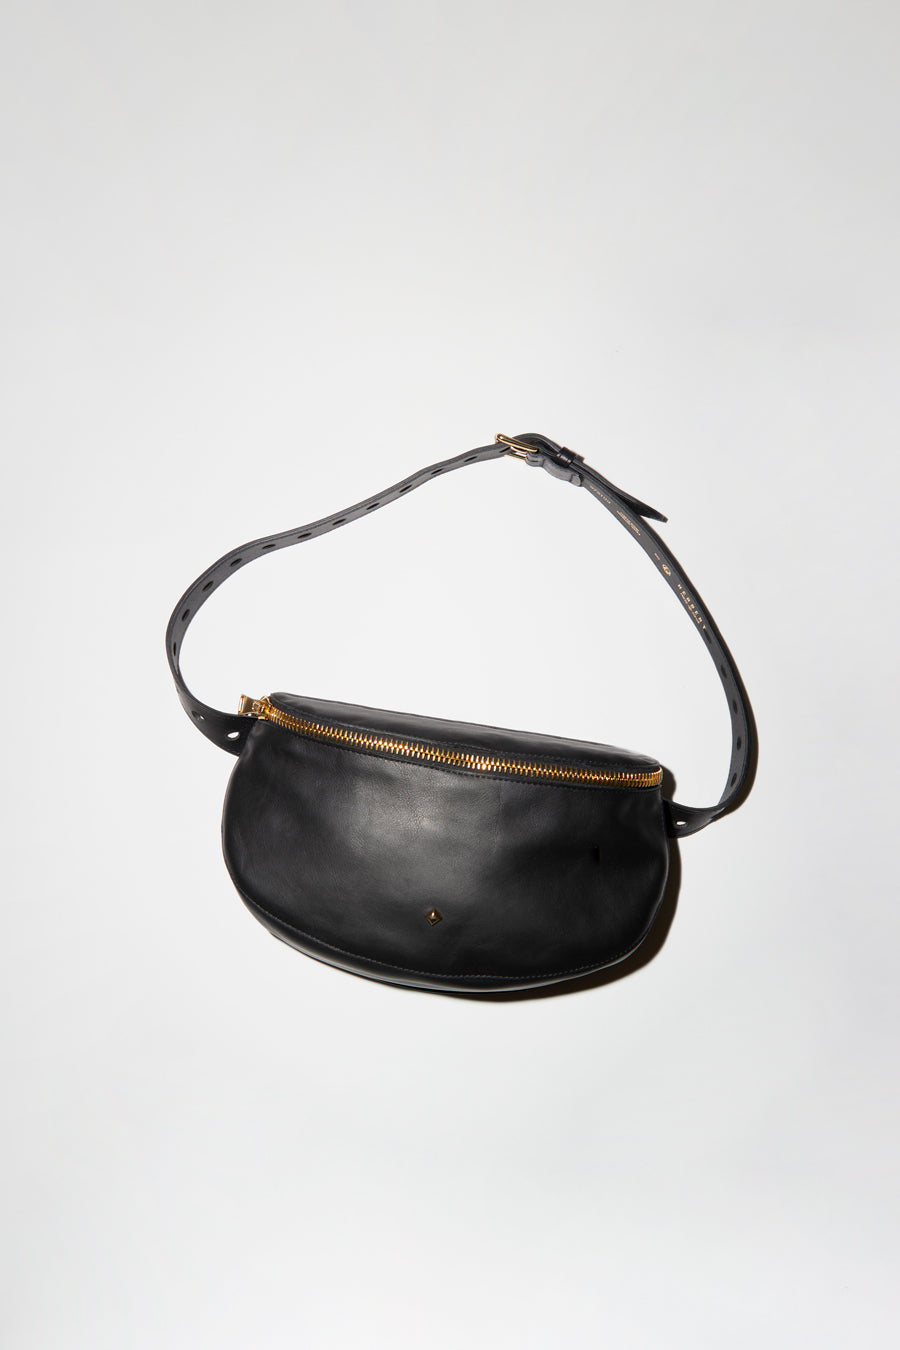 La lili bum bag in metallic leather, gold-coloured, Herbert Frere Soeur